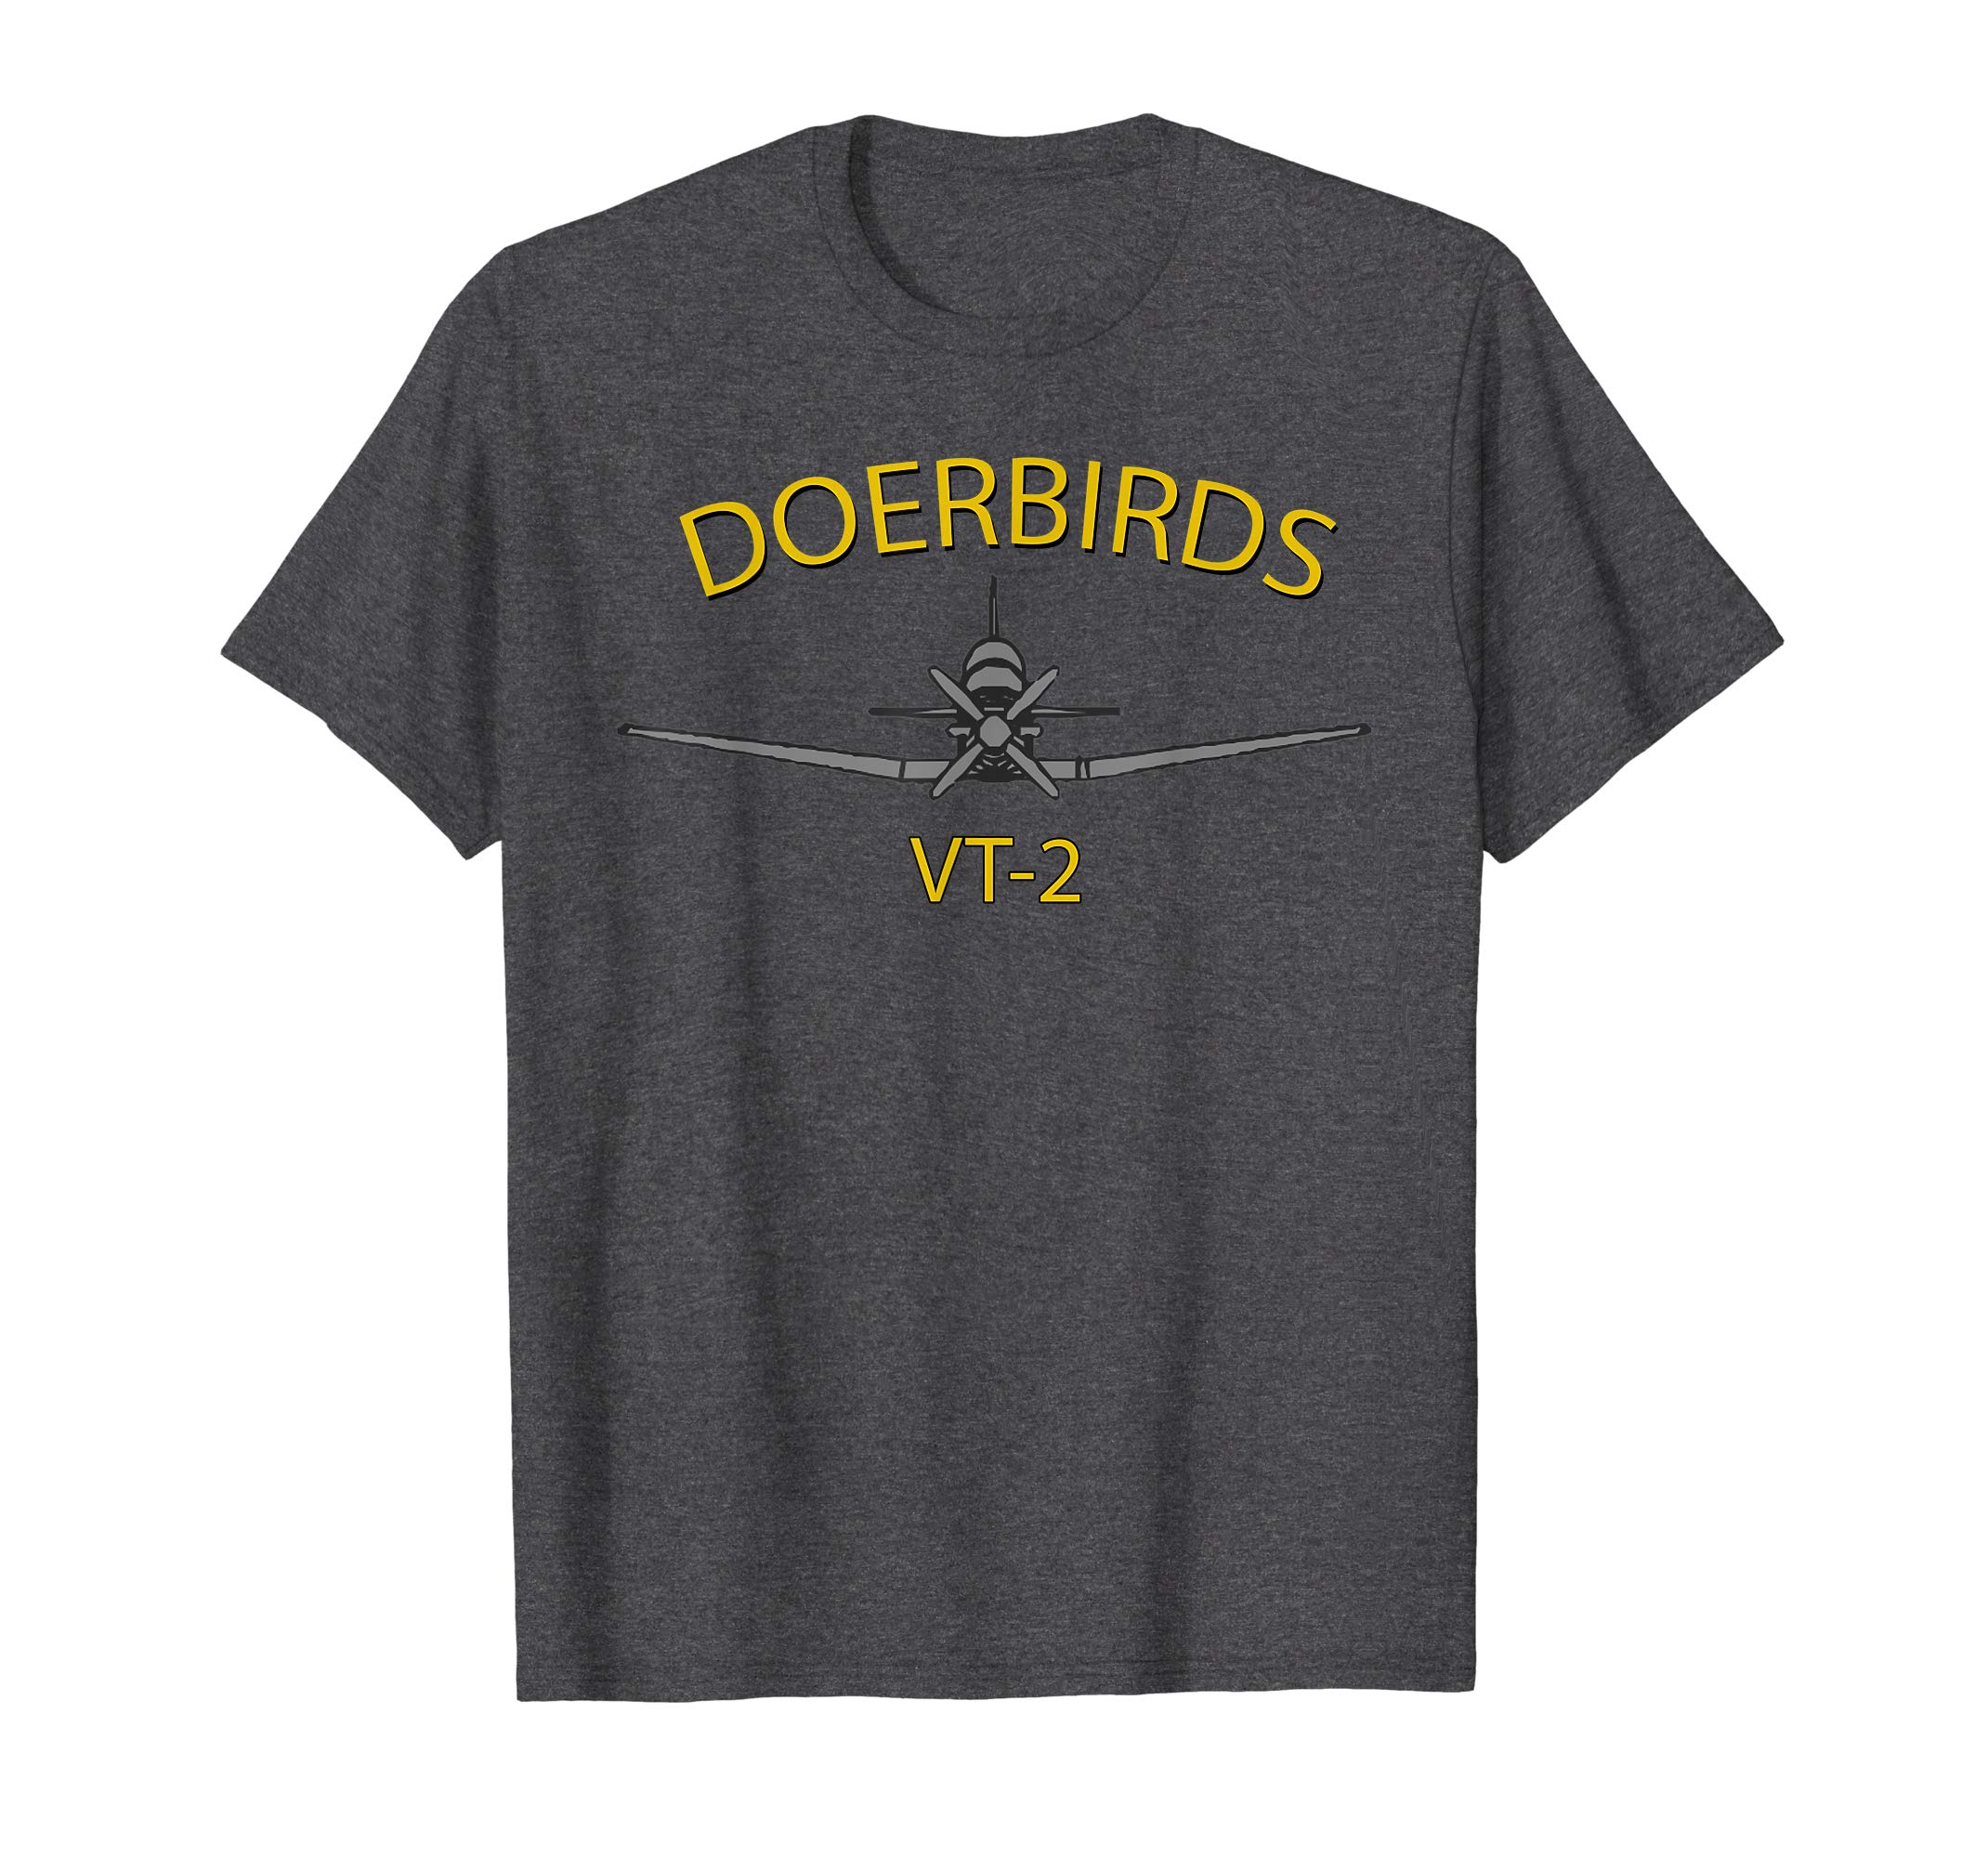 Vt-2 Logo - VT 2 Doerbirds Training Squadron 2 T 6 Texan II T